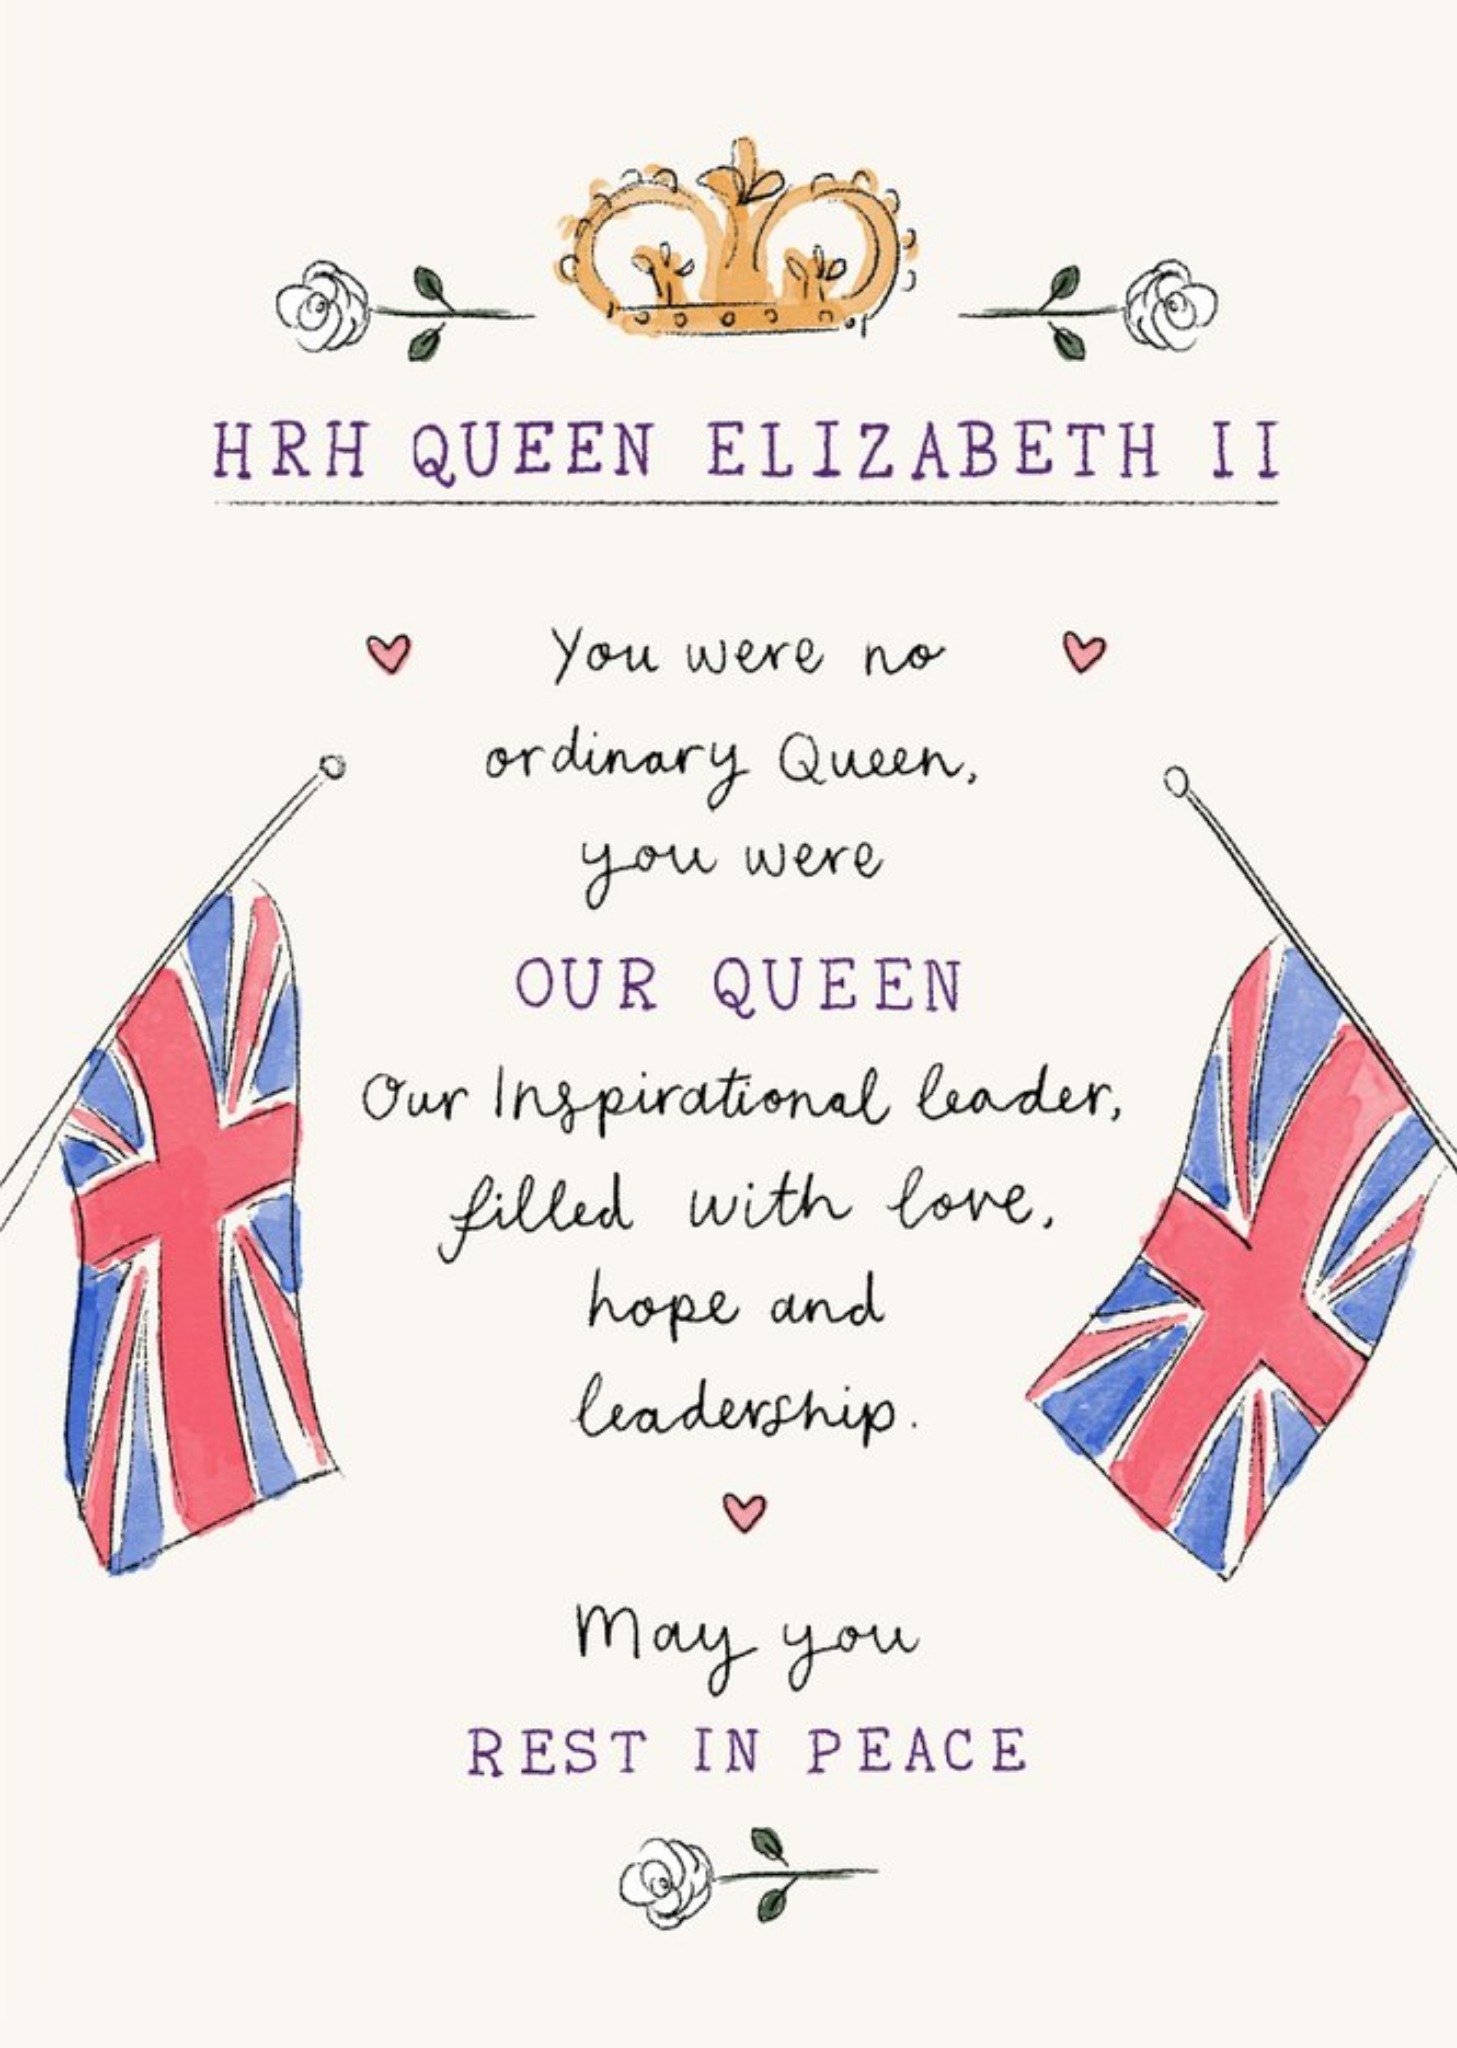 Moonpig Hrh Queen Elizabeth Ii Rest In Peace Card Ecard